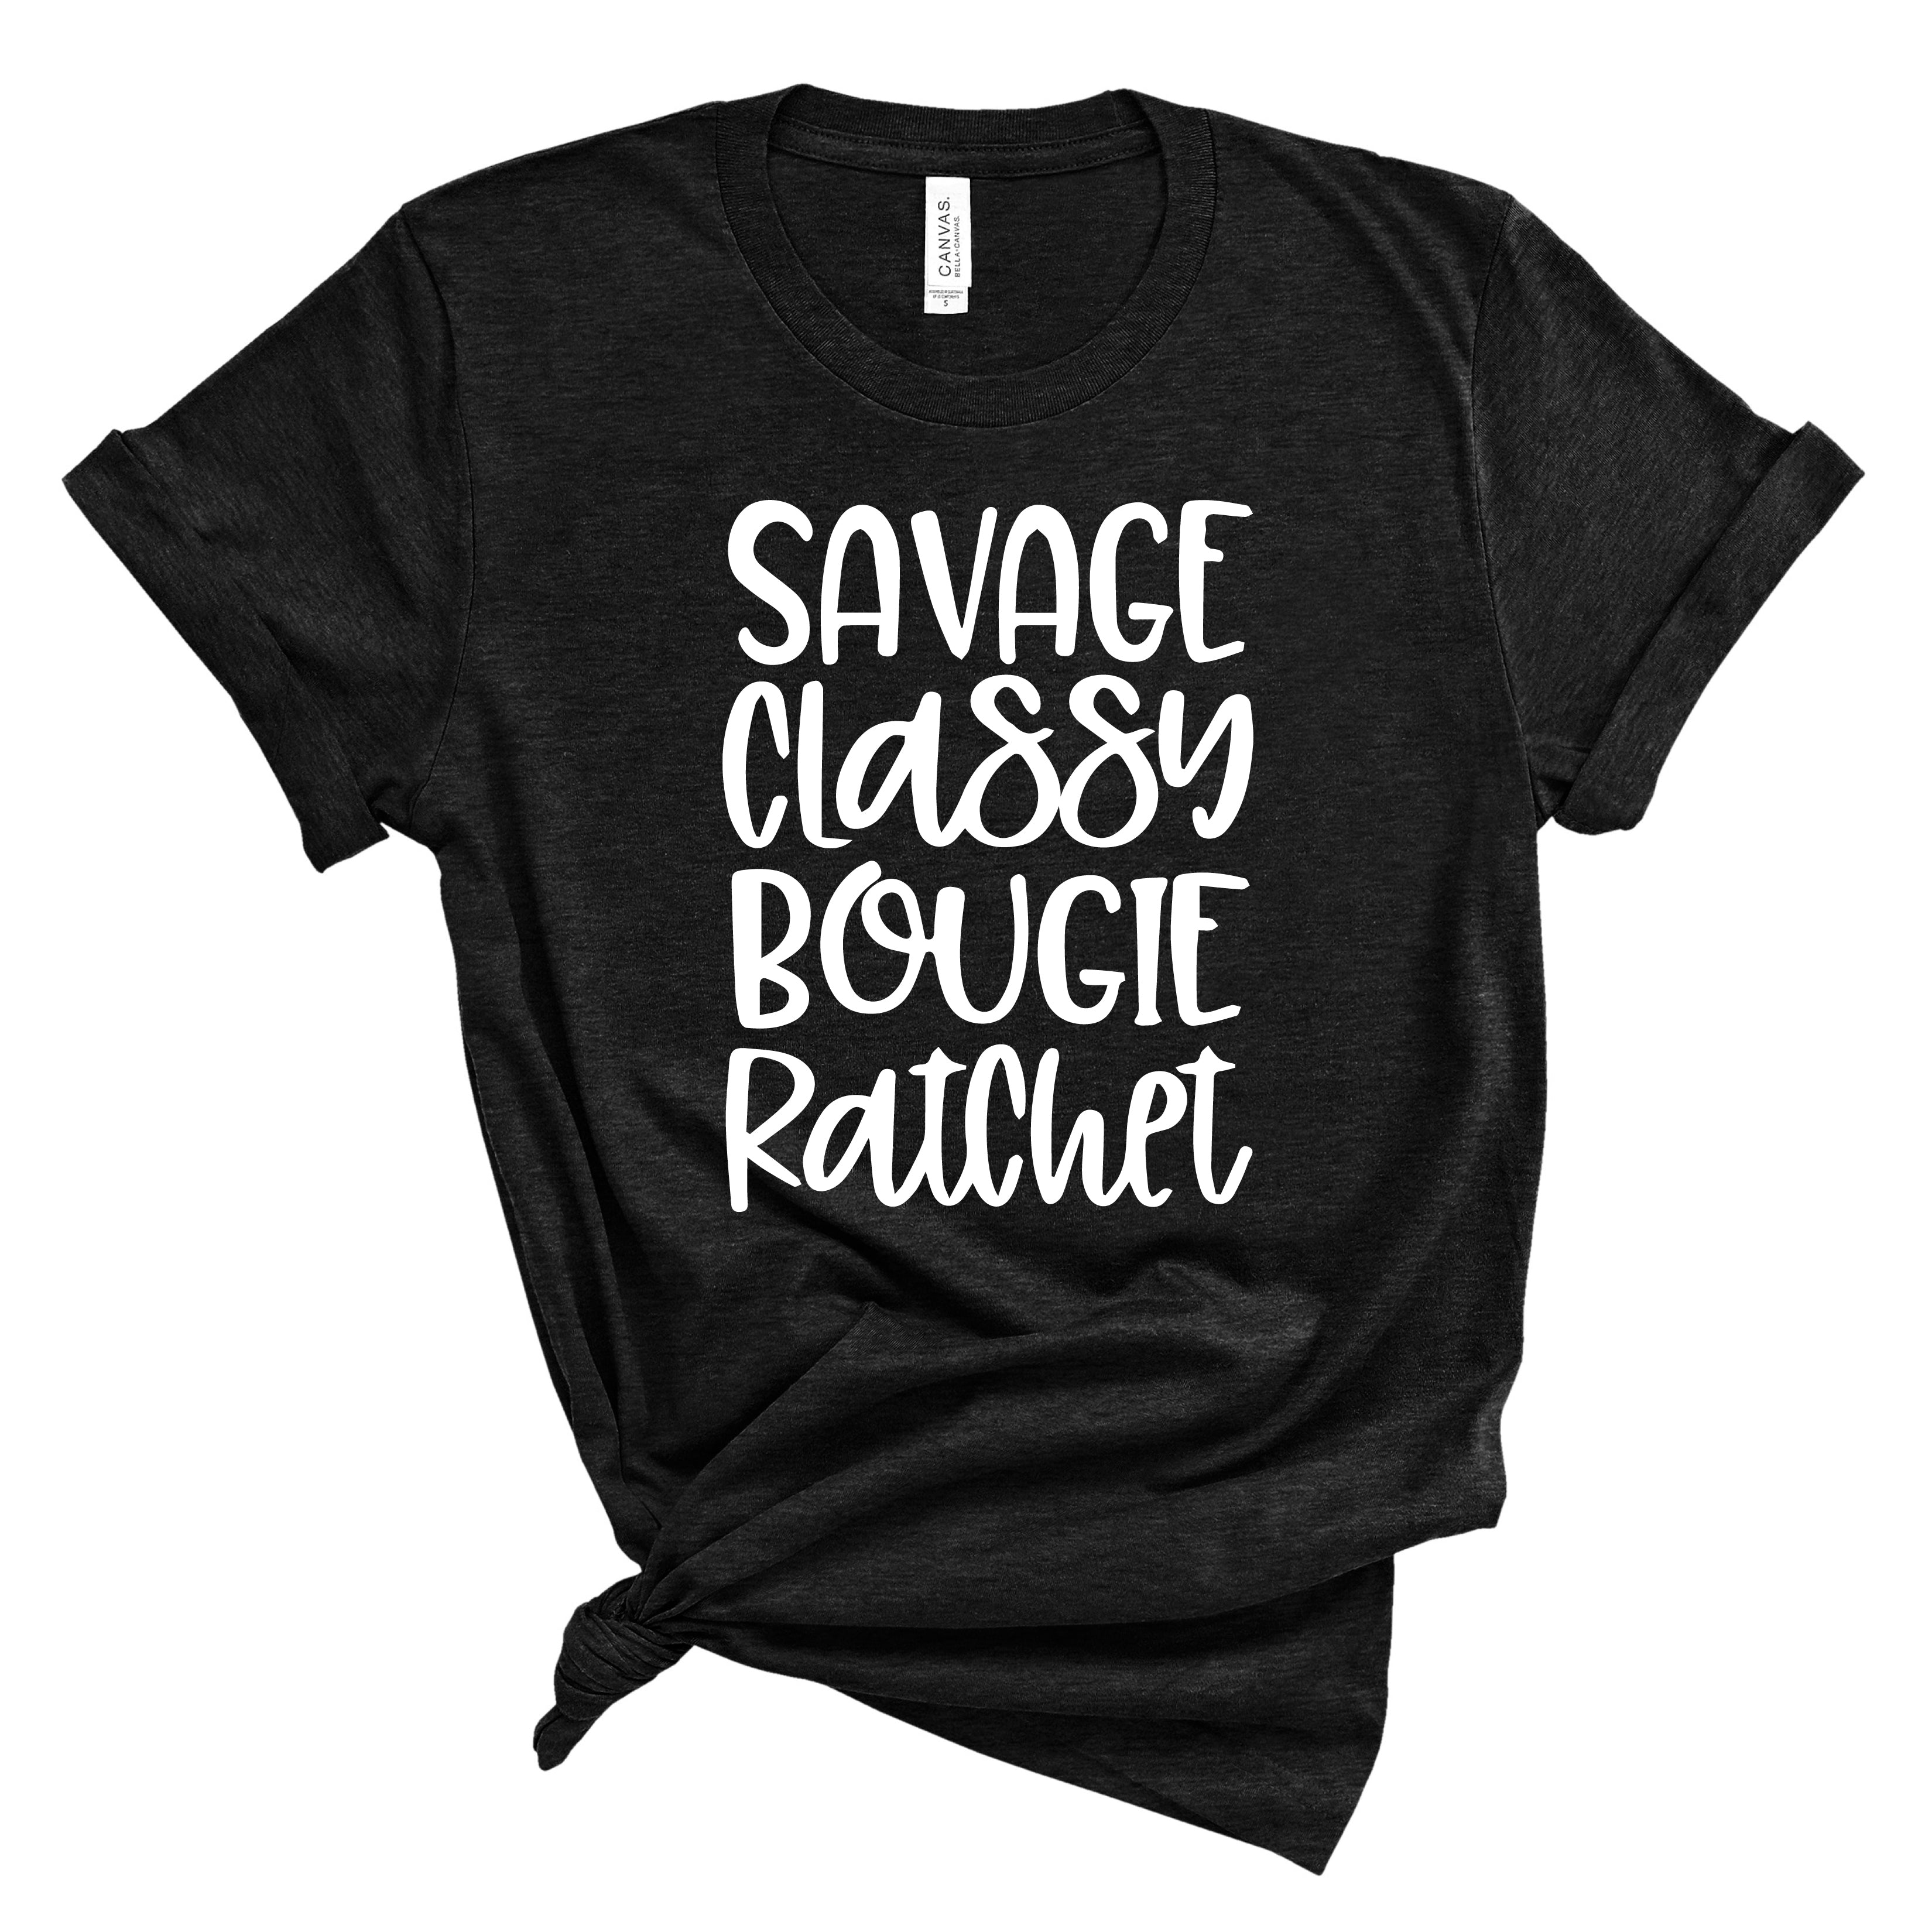 Savage Classy Bougie Ratchet Shirt Tik Tok Leopard Lips 